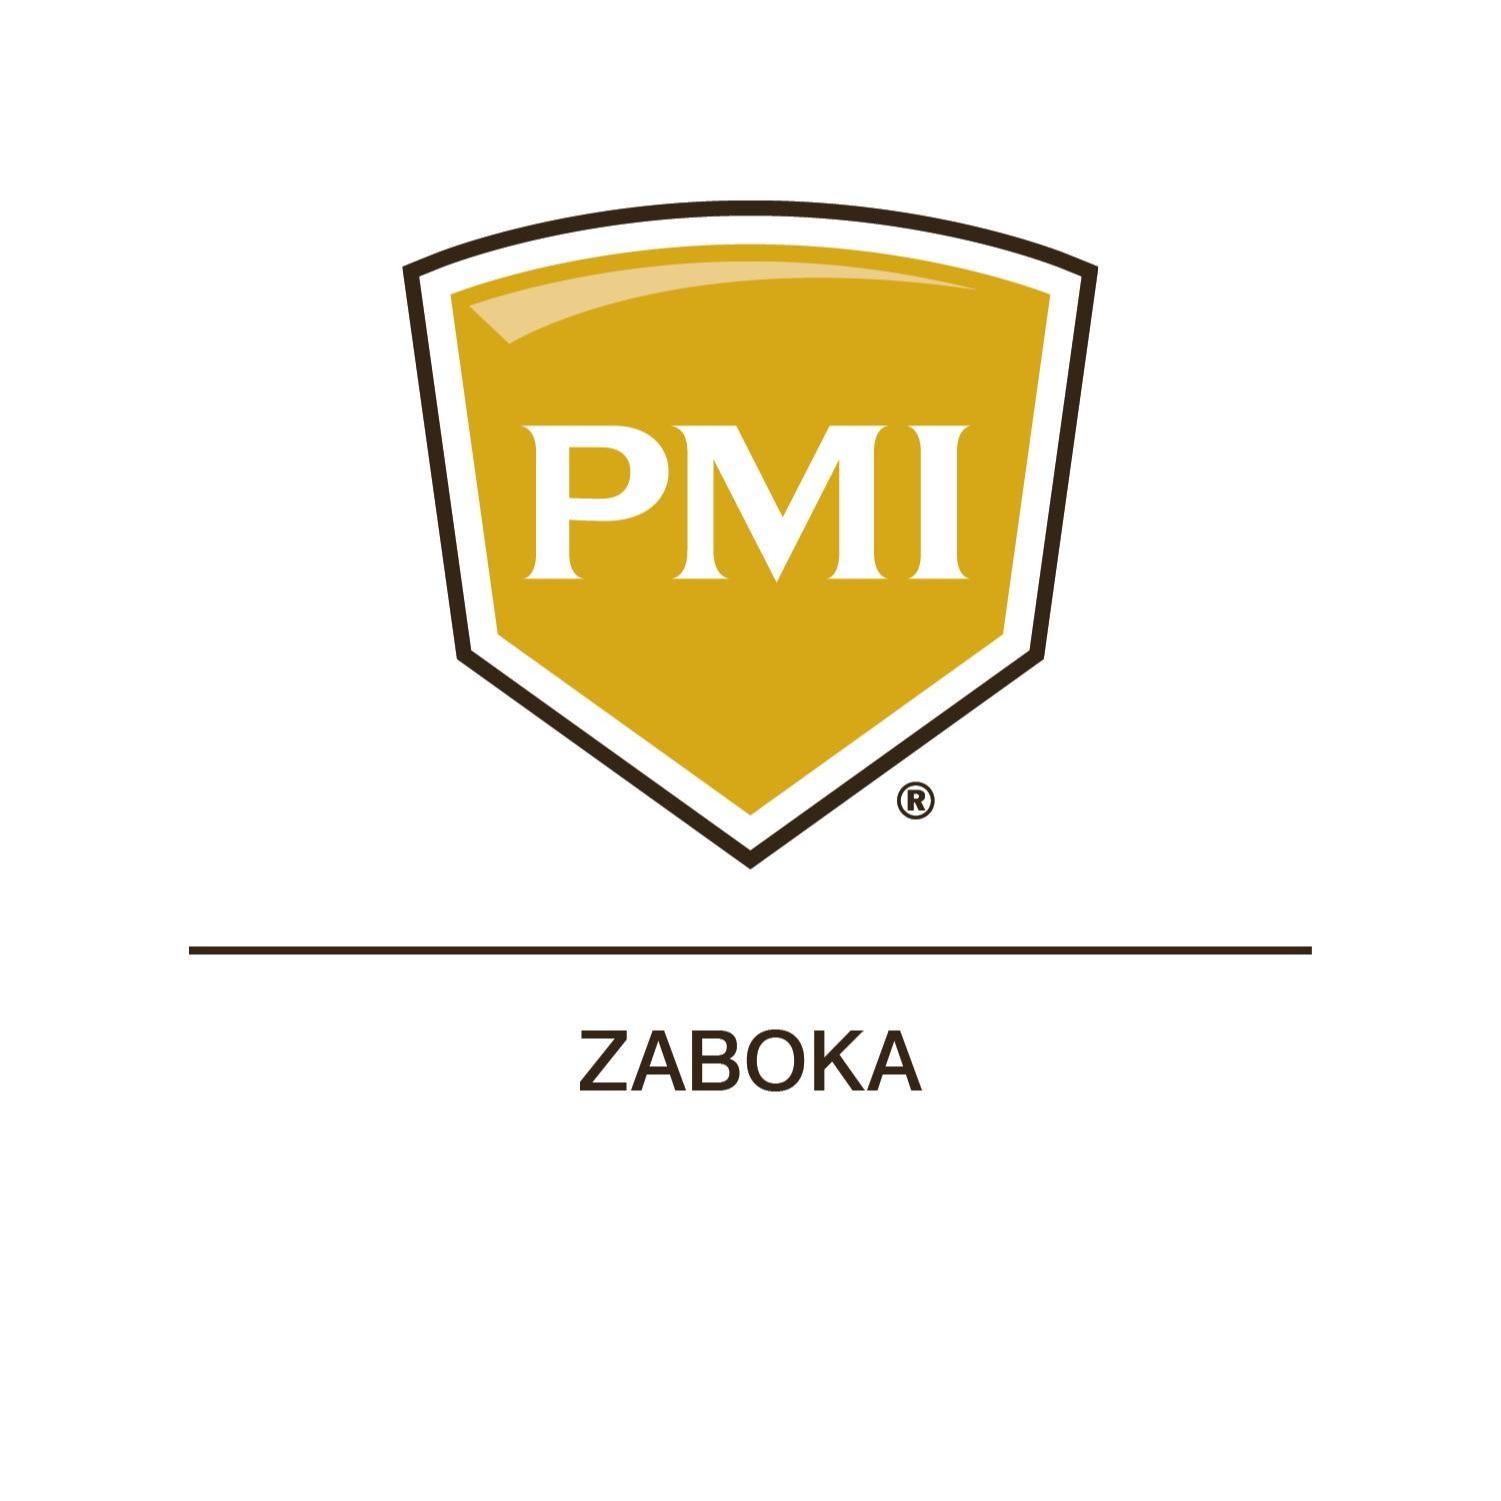 PMI Zaboka - Royal Palm Beach, FL 33414 - (561)679-7769 | ShowMeLocal.com